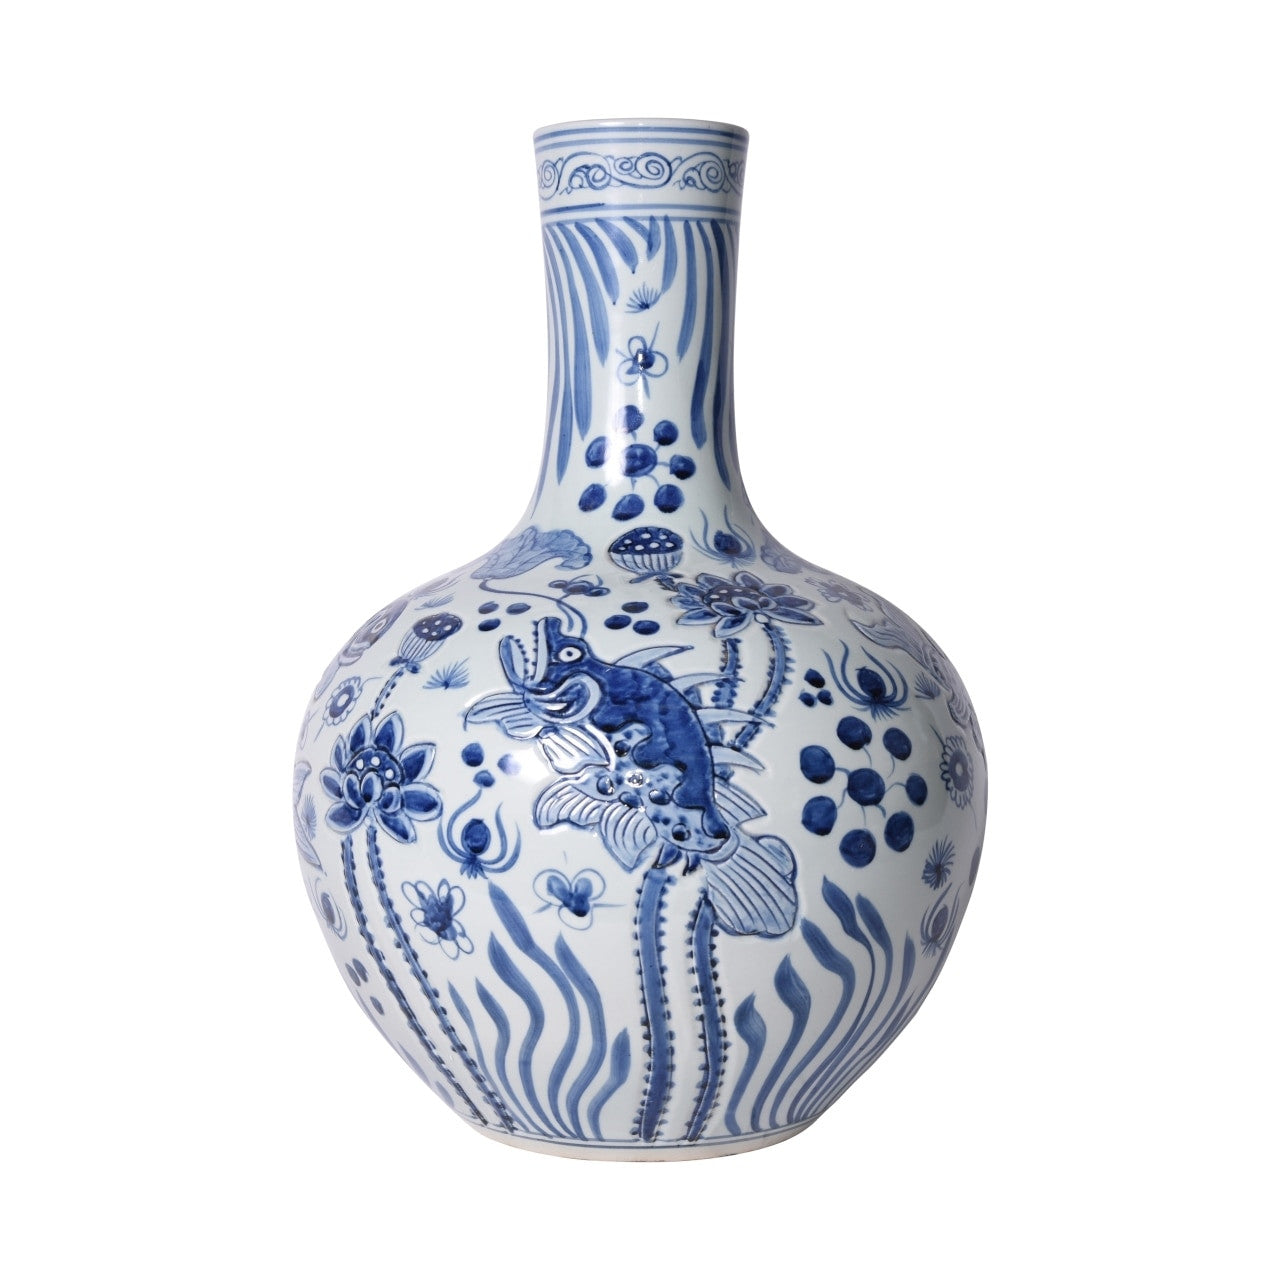 Beautiful Blue and White Fish Motif Emobssed Porcelain Globular Vase 21.5"